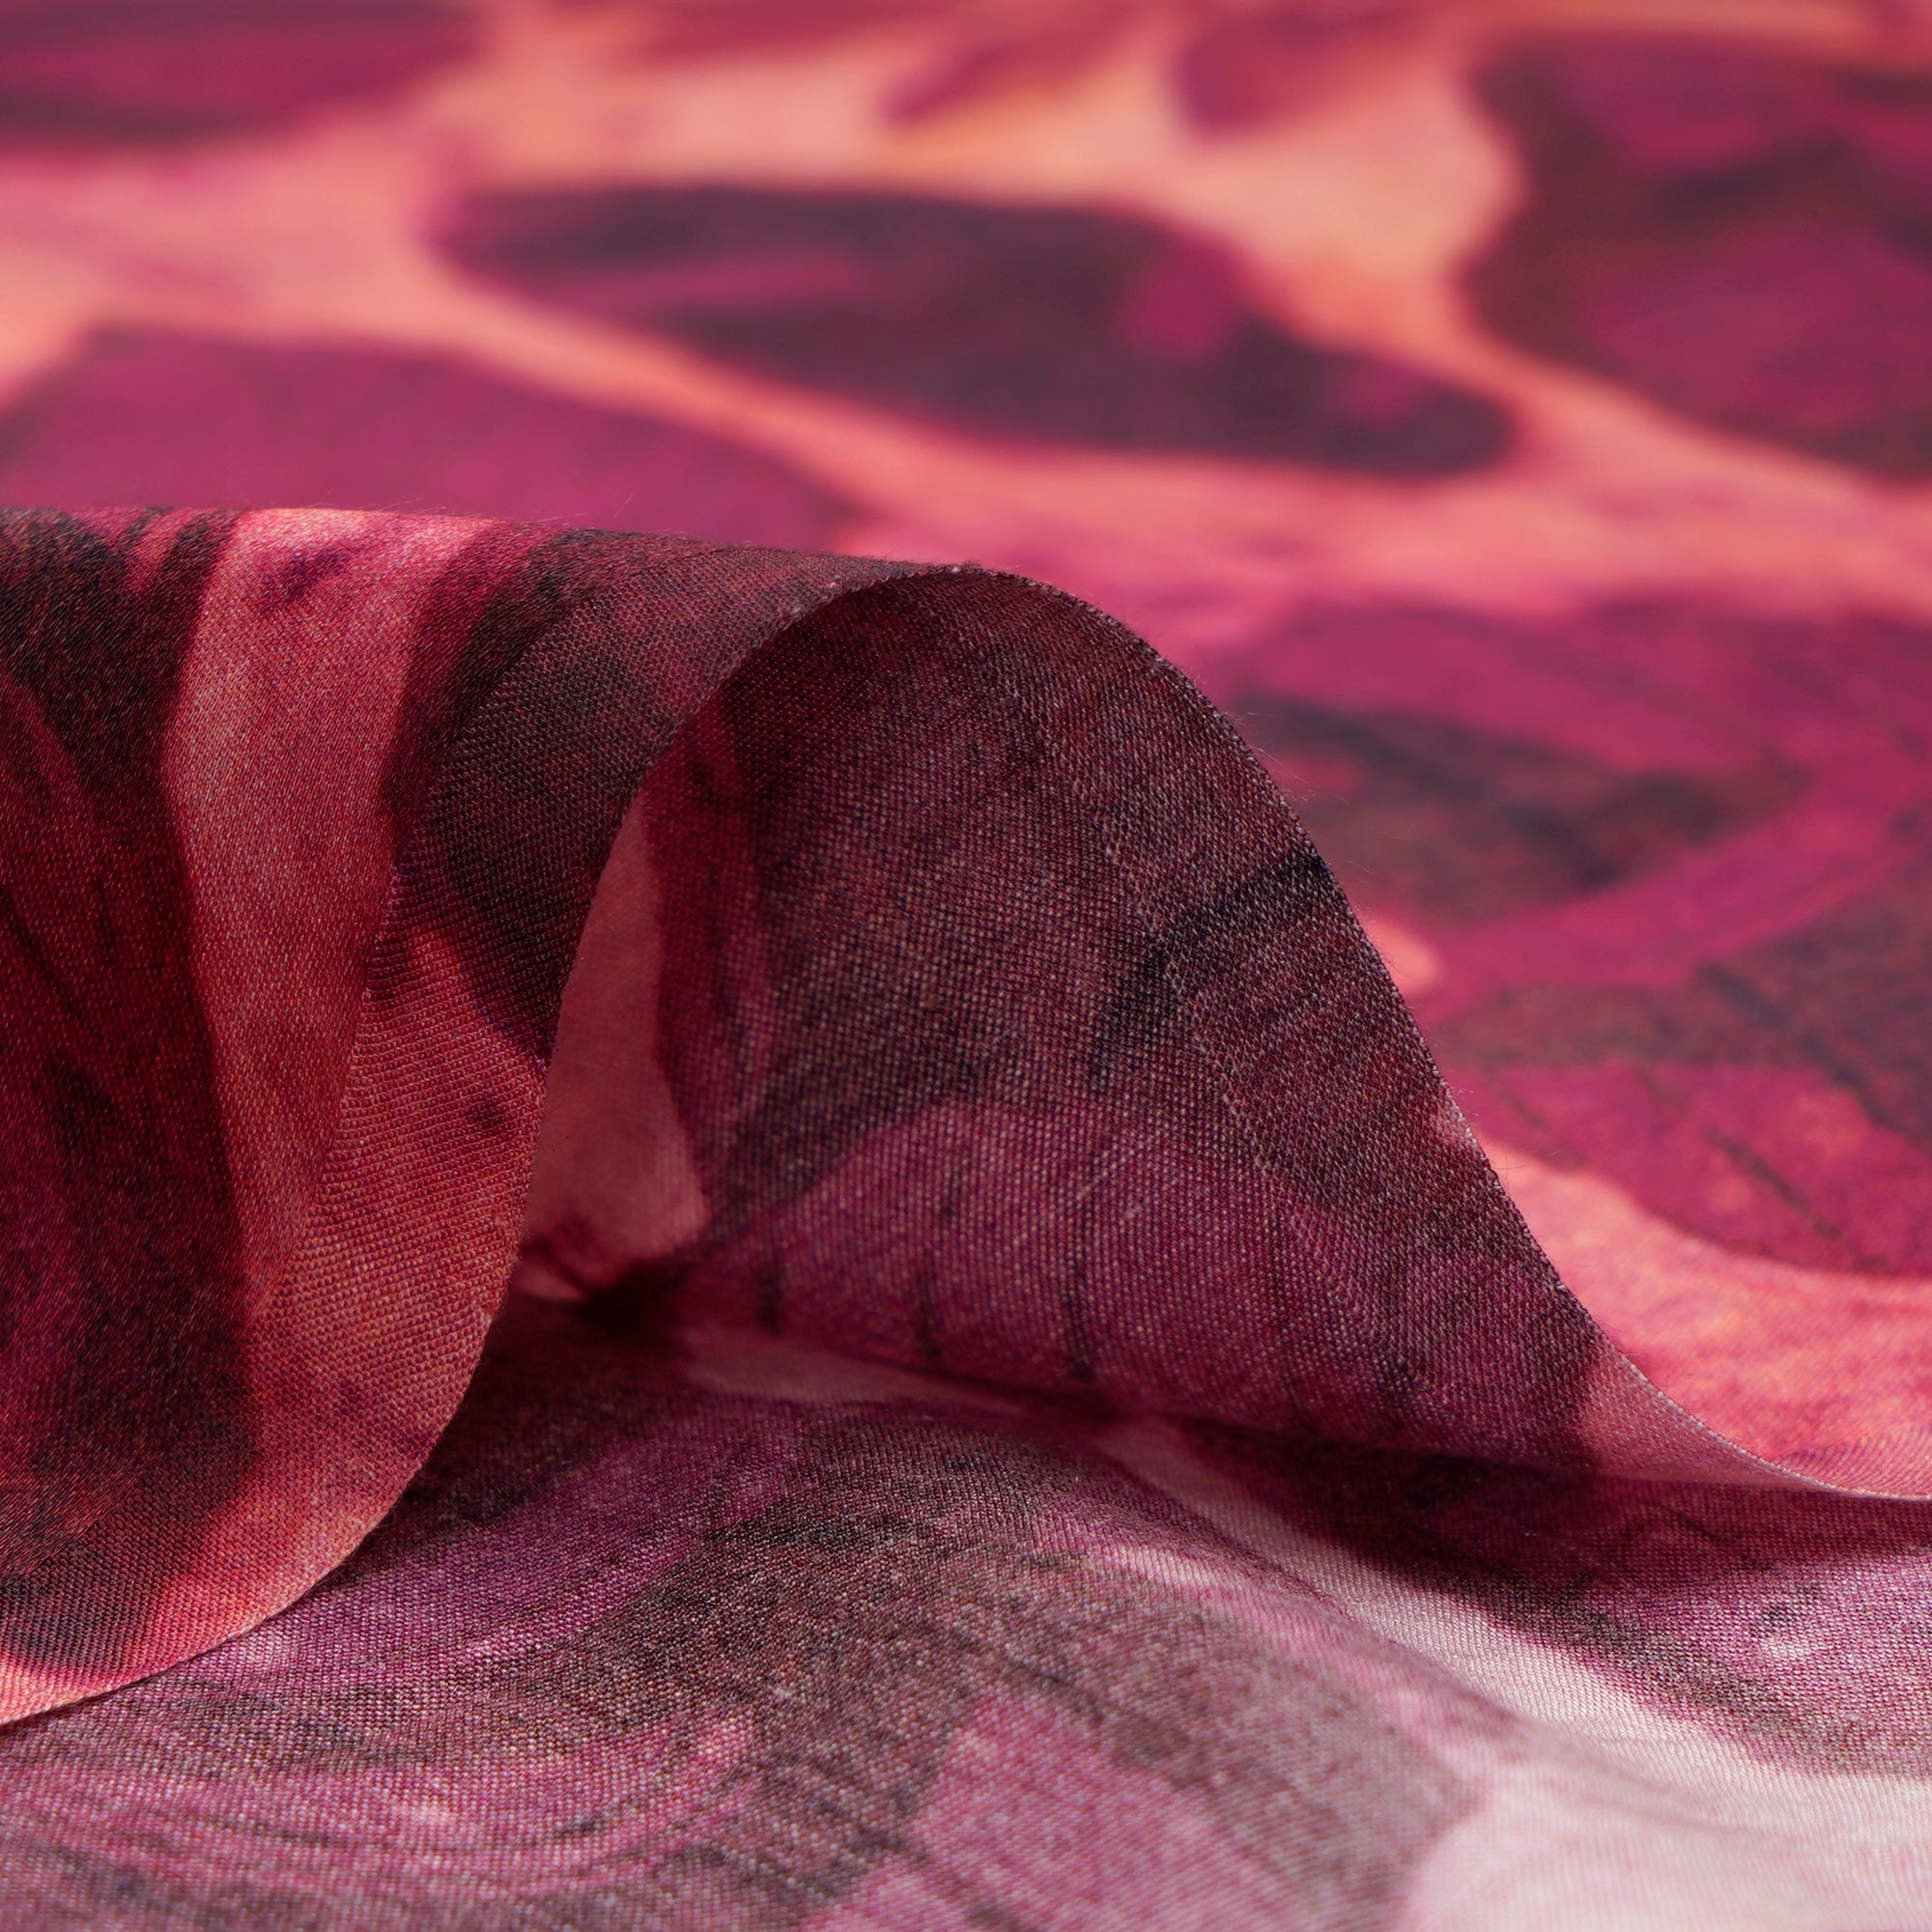 Wine Leaf Pattern Digital Print Modal Satin Fabric